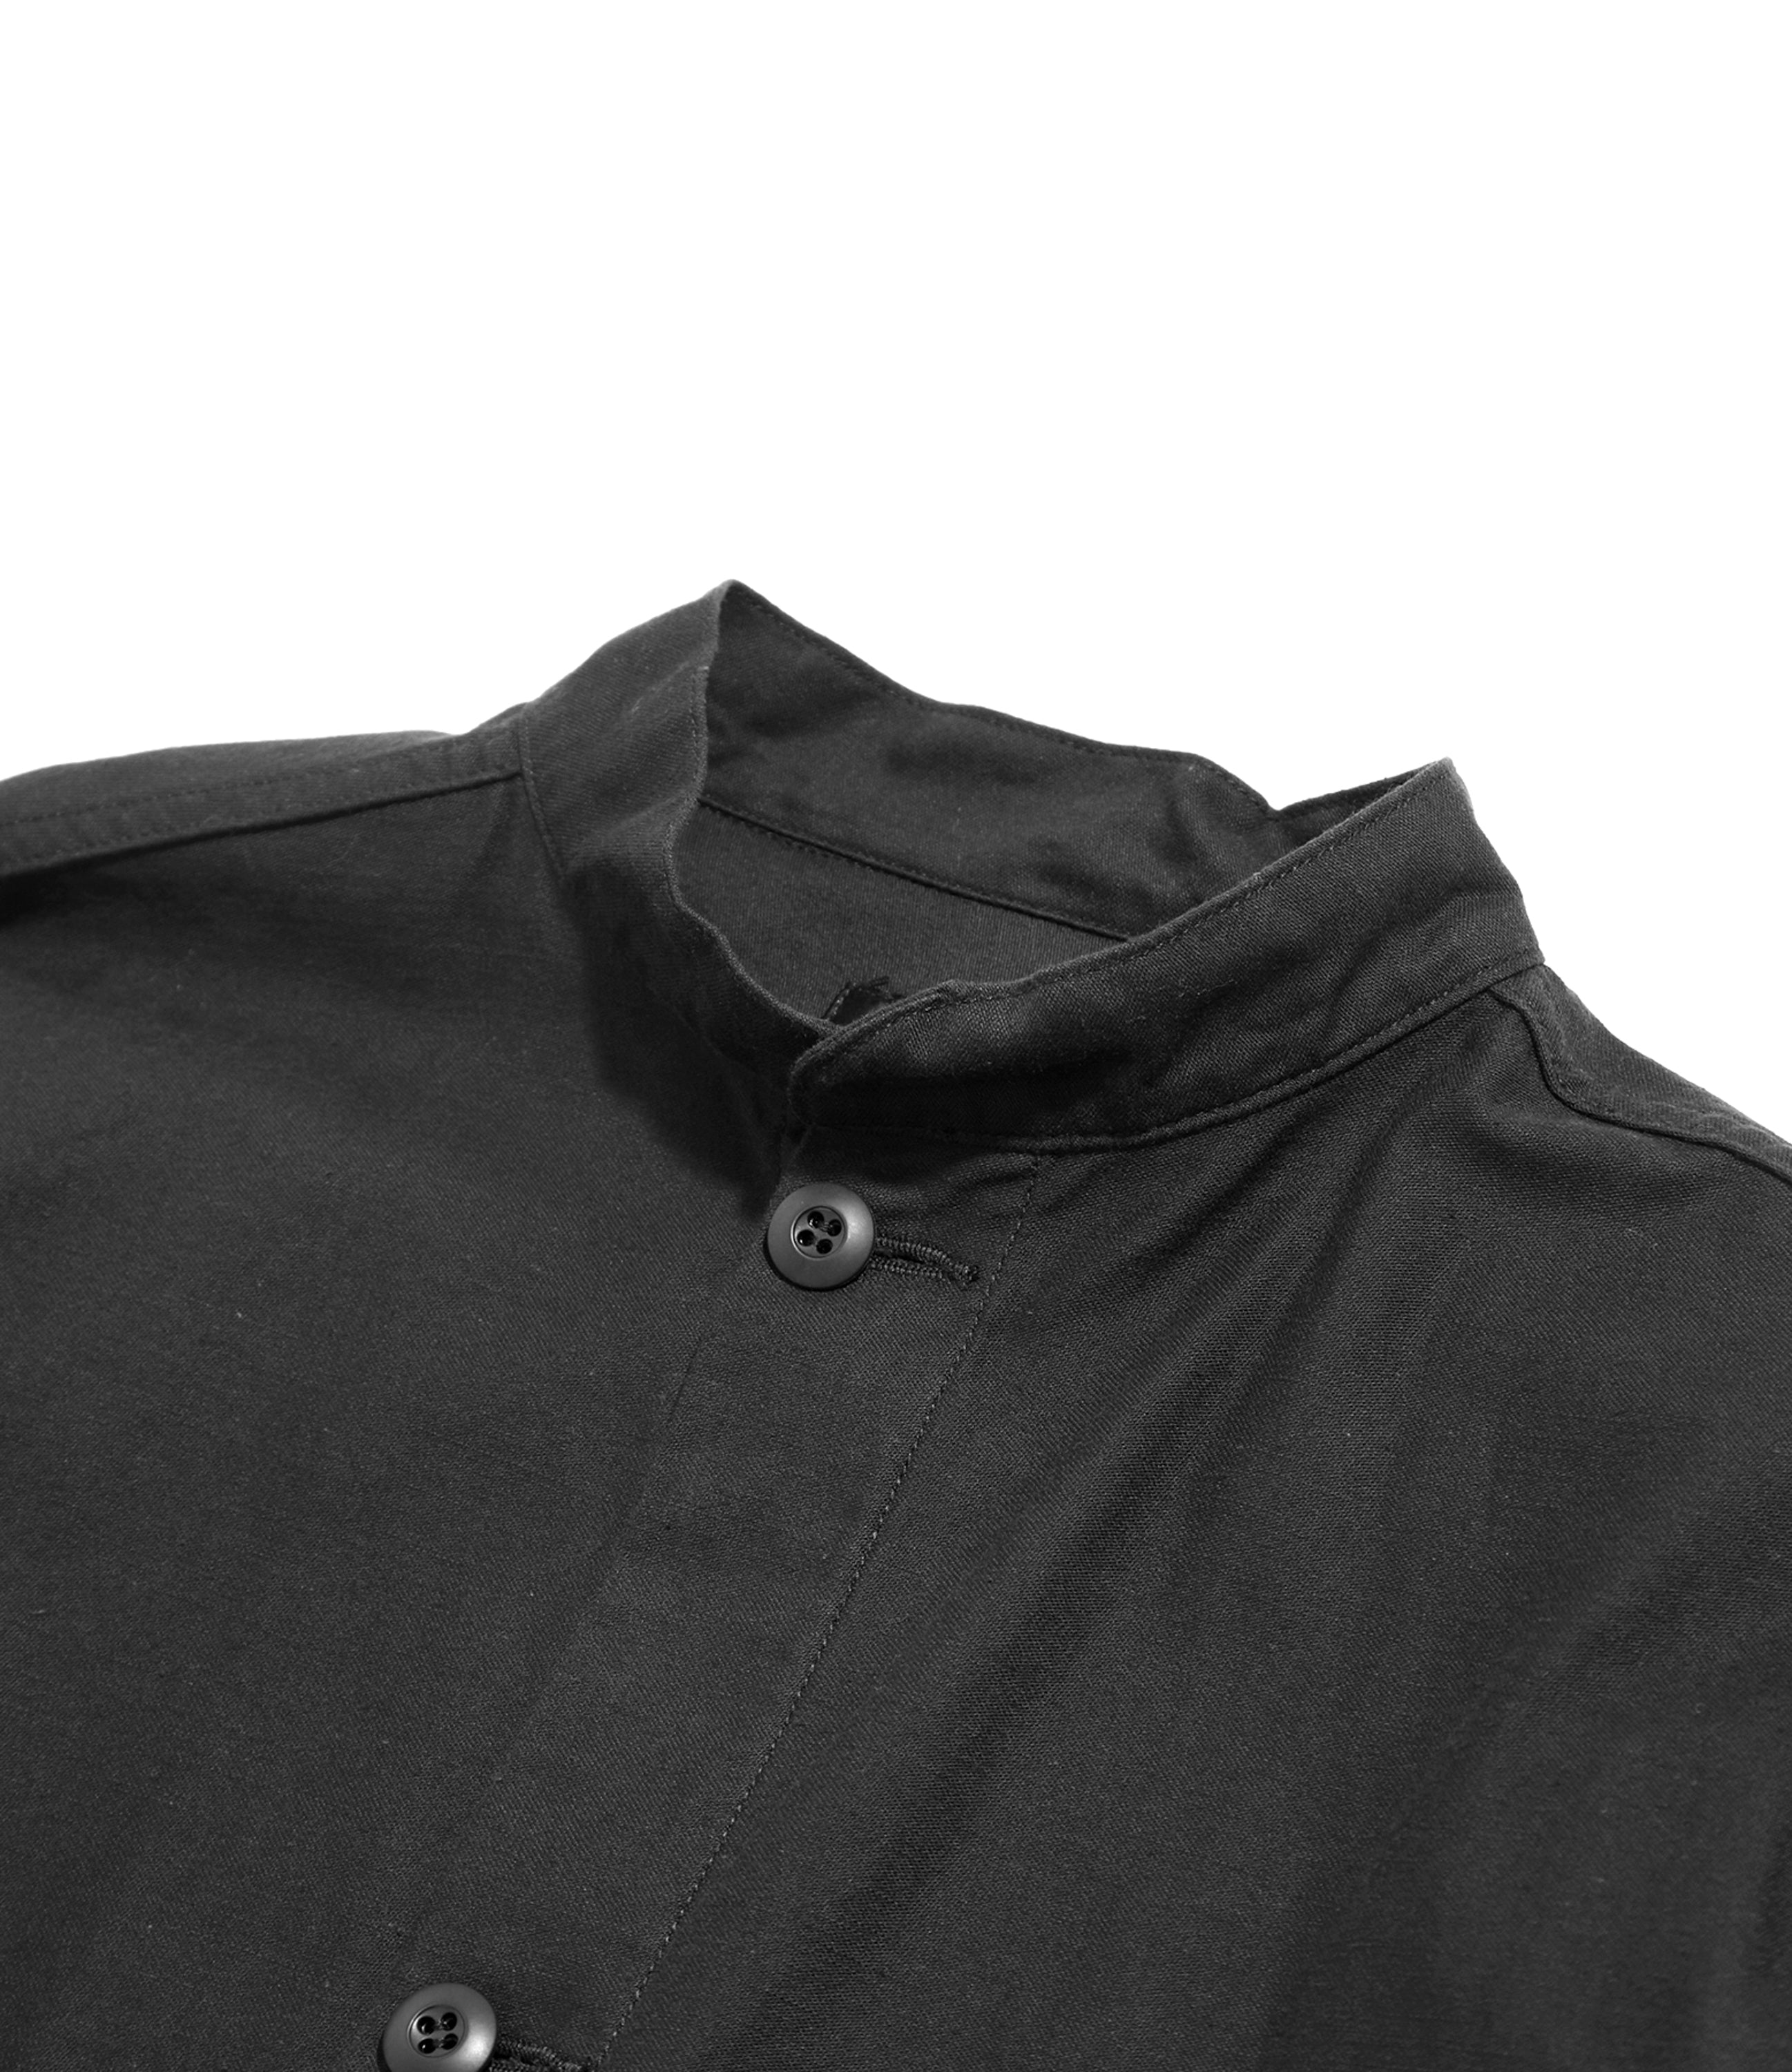 S.C. Army Shirt - Black - Back Sateen